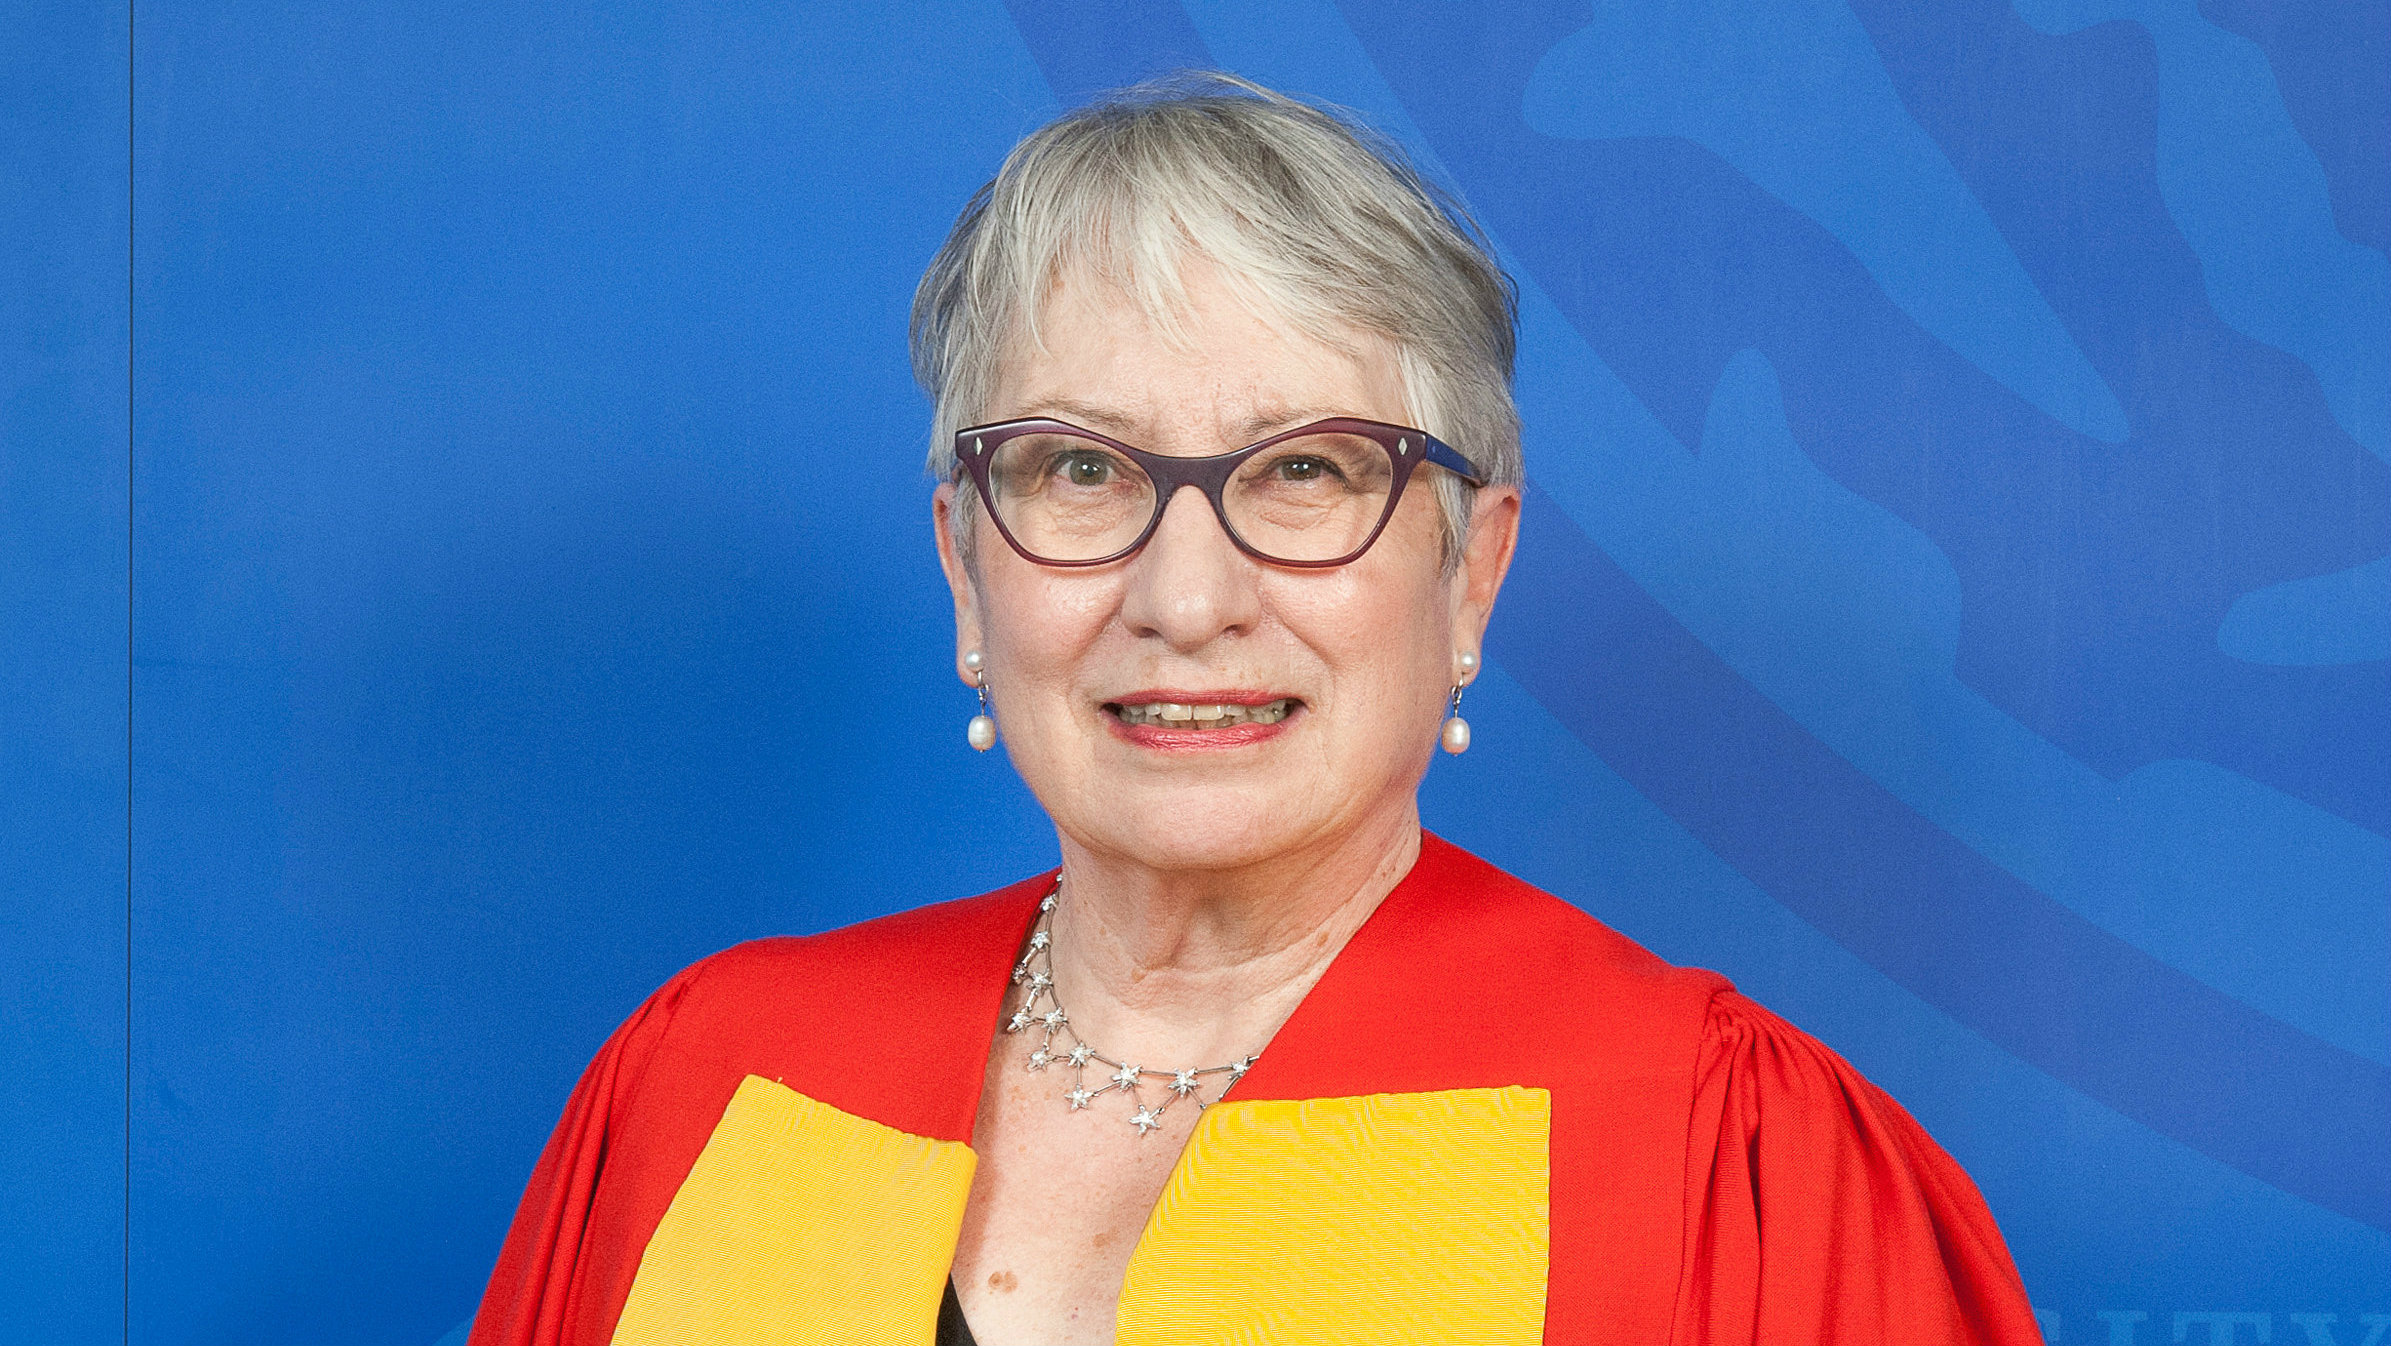 Professor Uta Frith